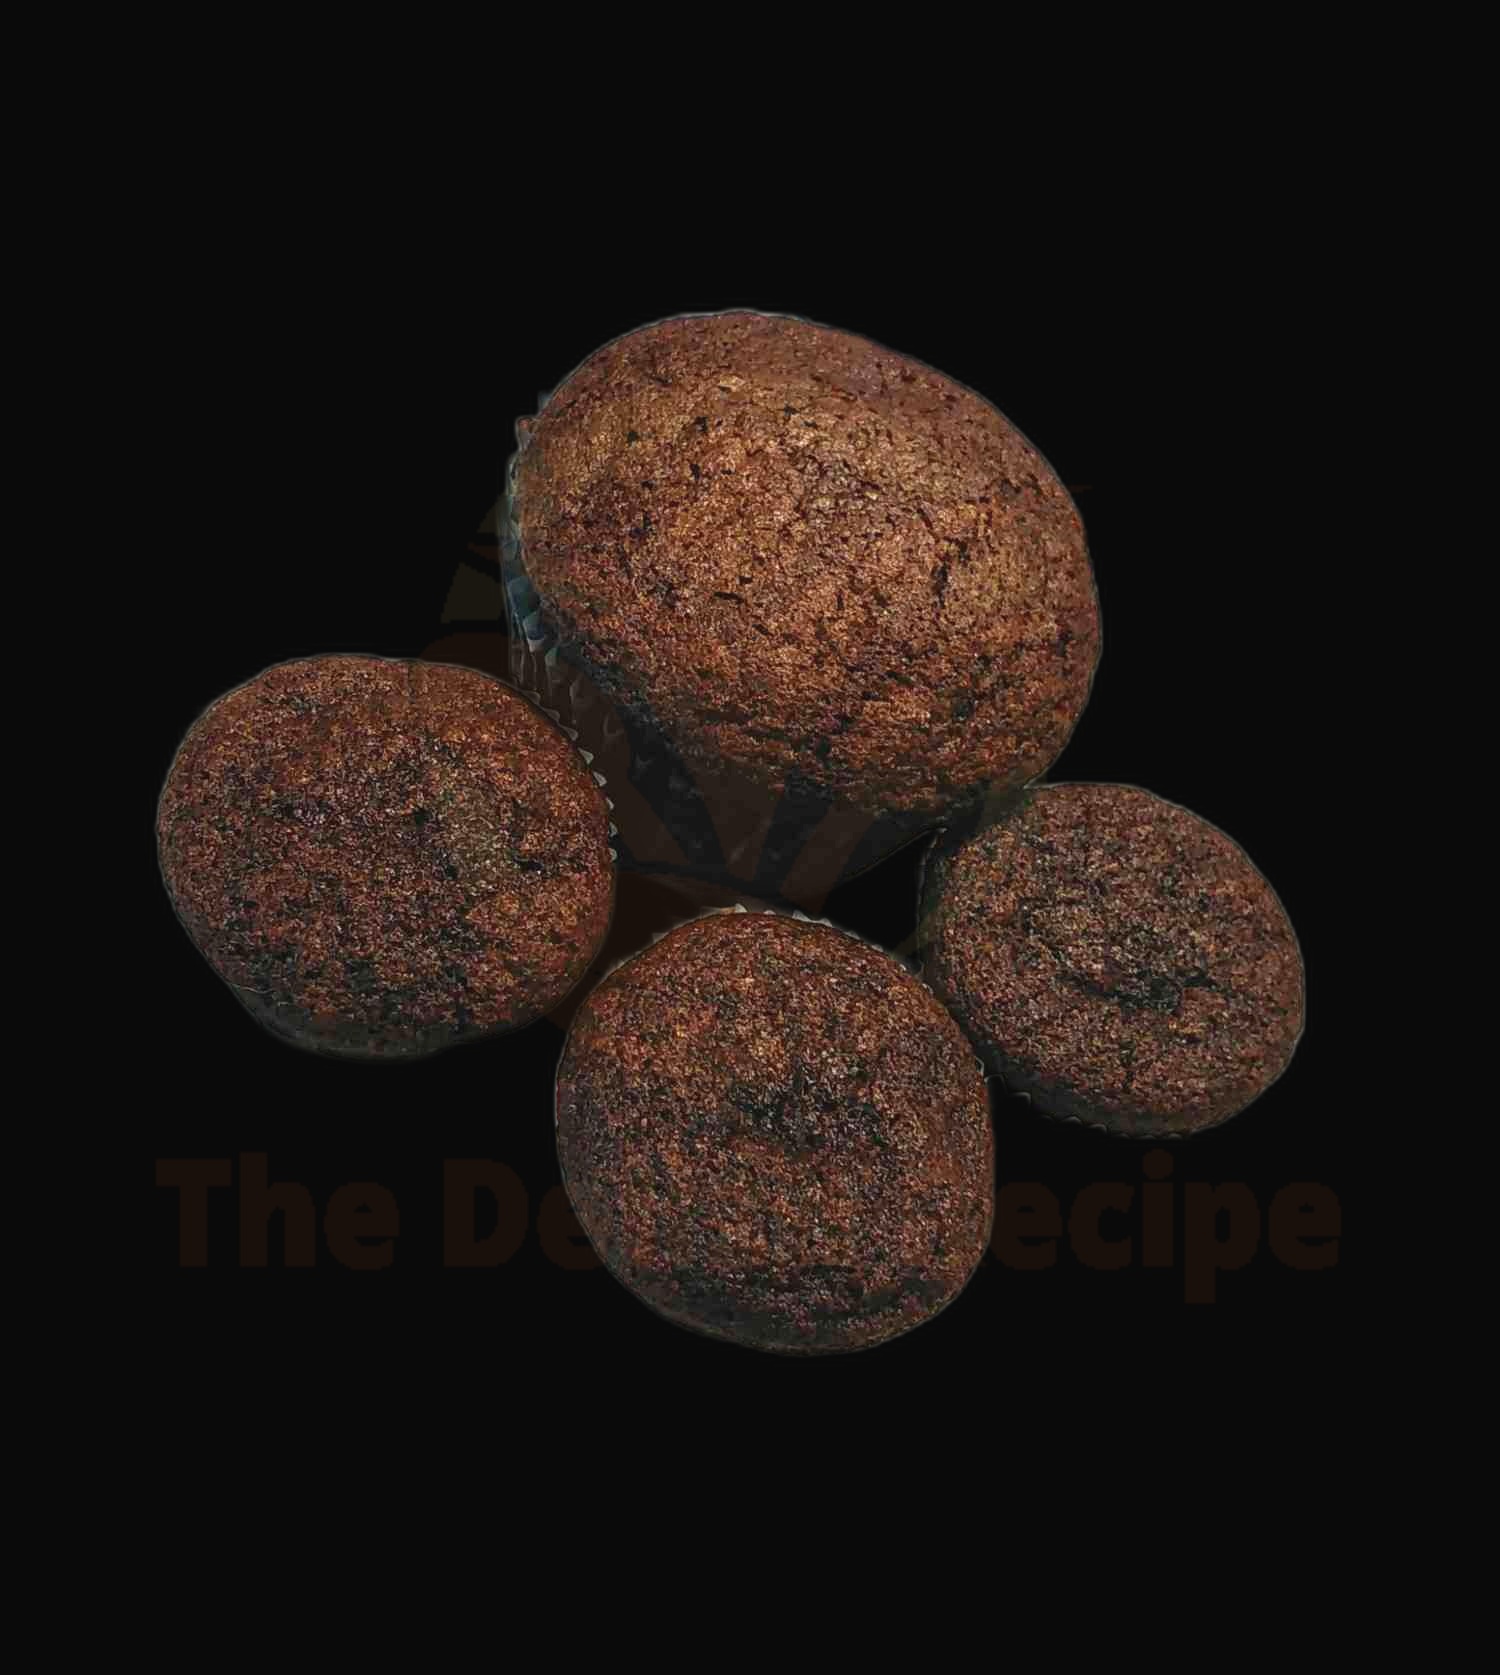 Chocolate Spelt Muffins